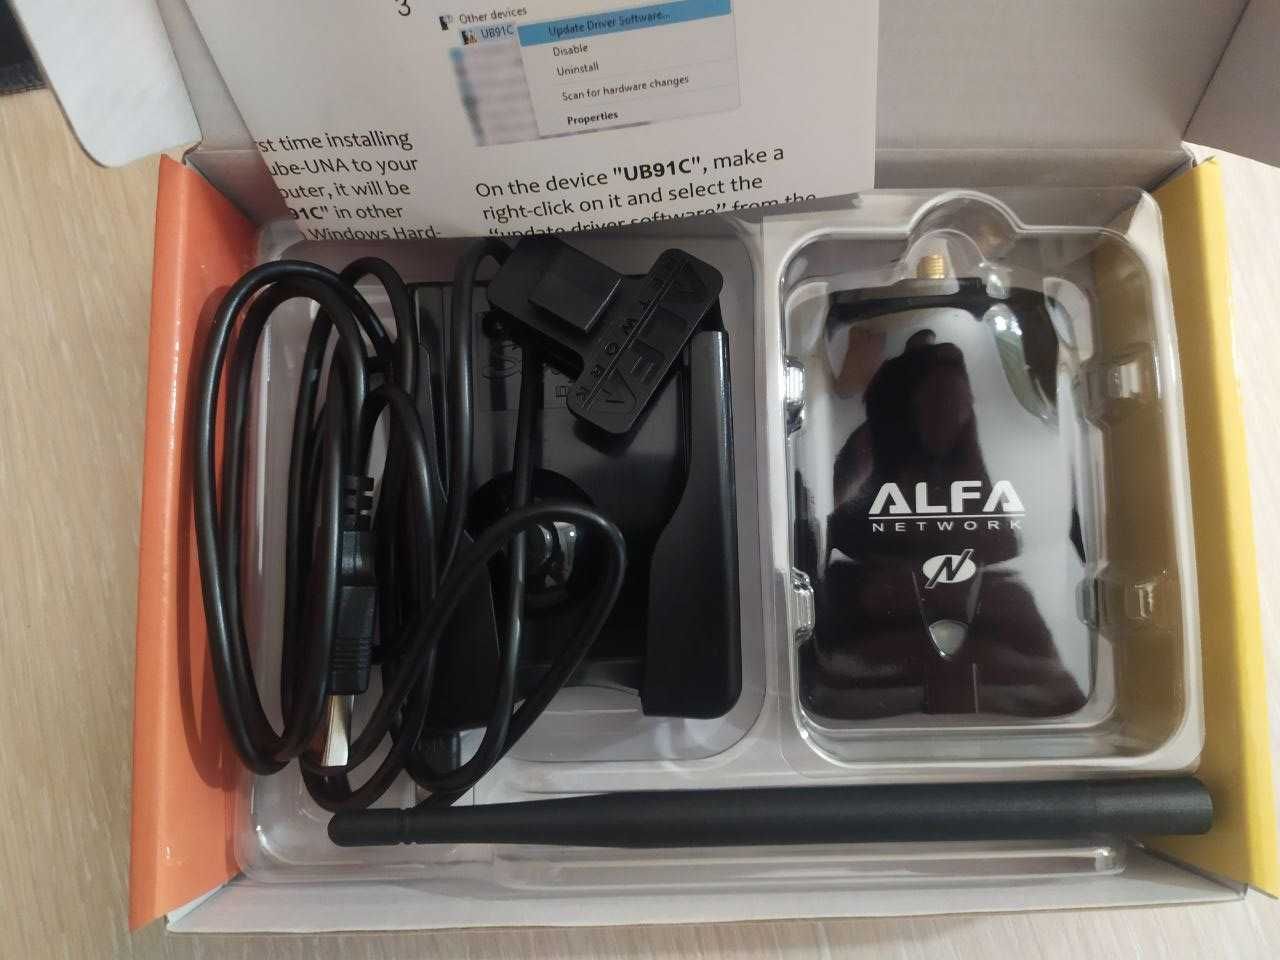 Alfa AWUS 036NHA+APA M04, Wi-Fi ADAPTER, Kali Linux, Оригинал